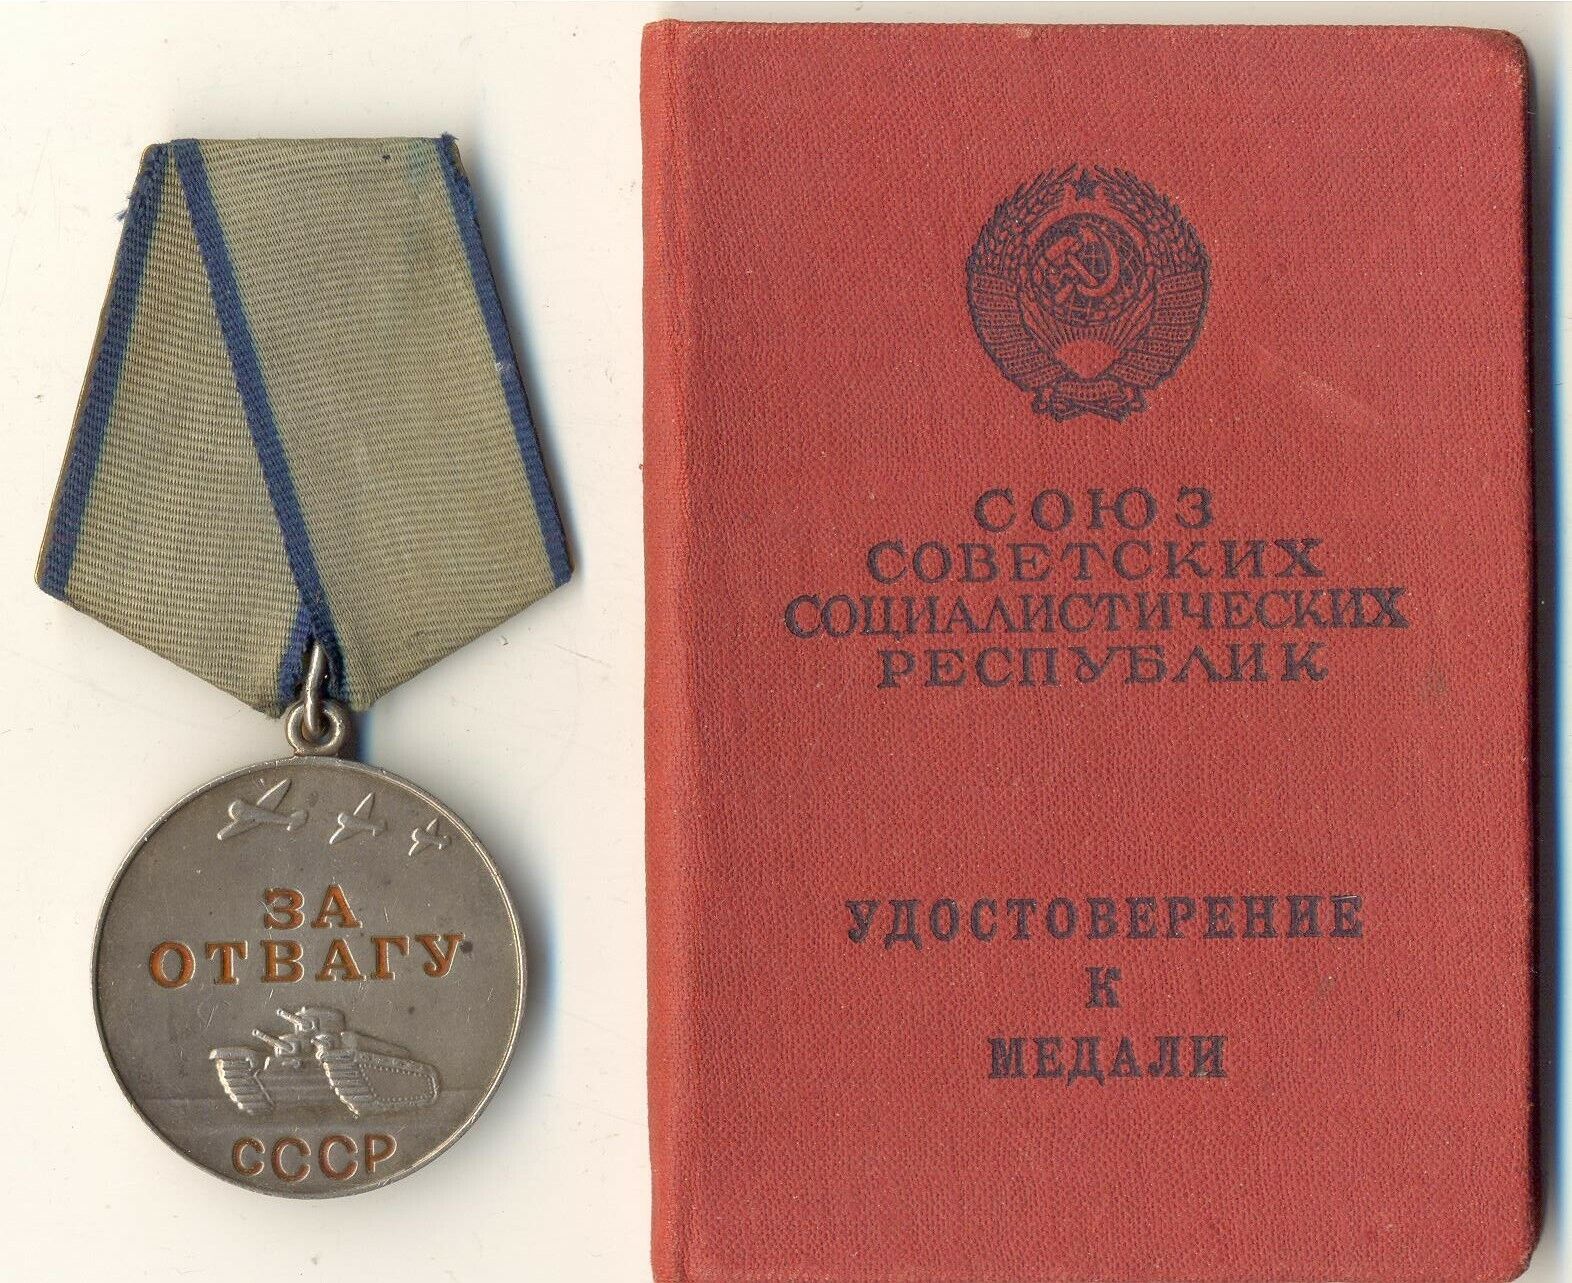  Soviet star badge red Medal Order  Banner For Courage Combat Female     (#1147)